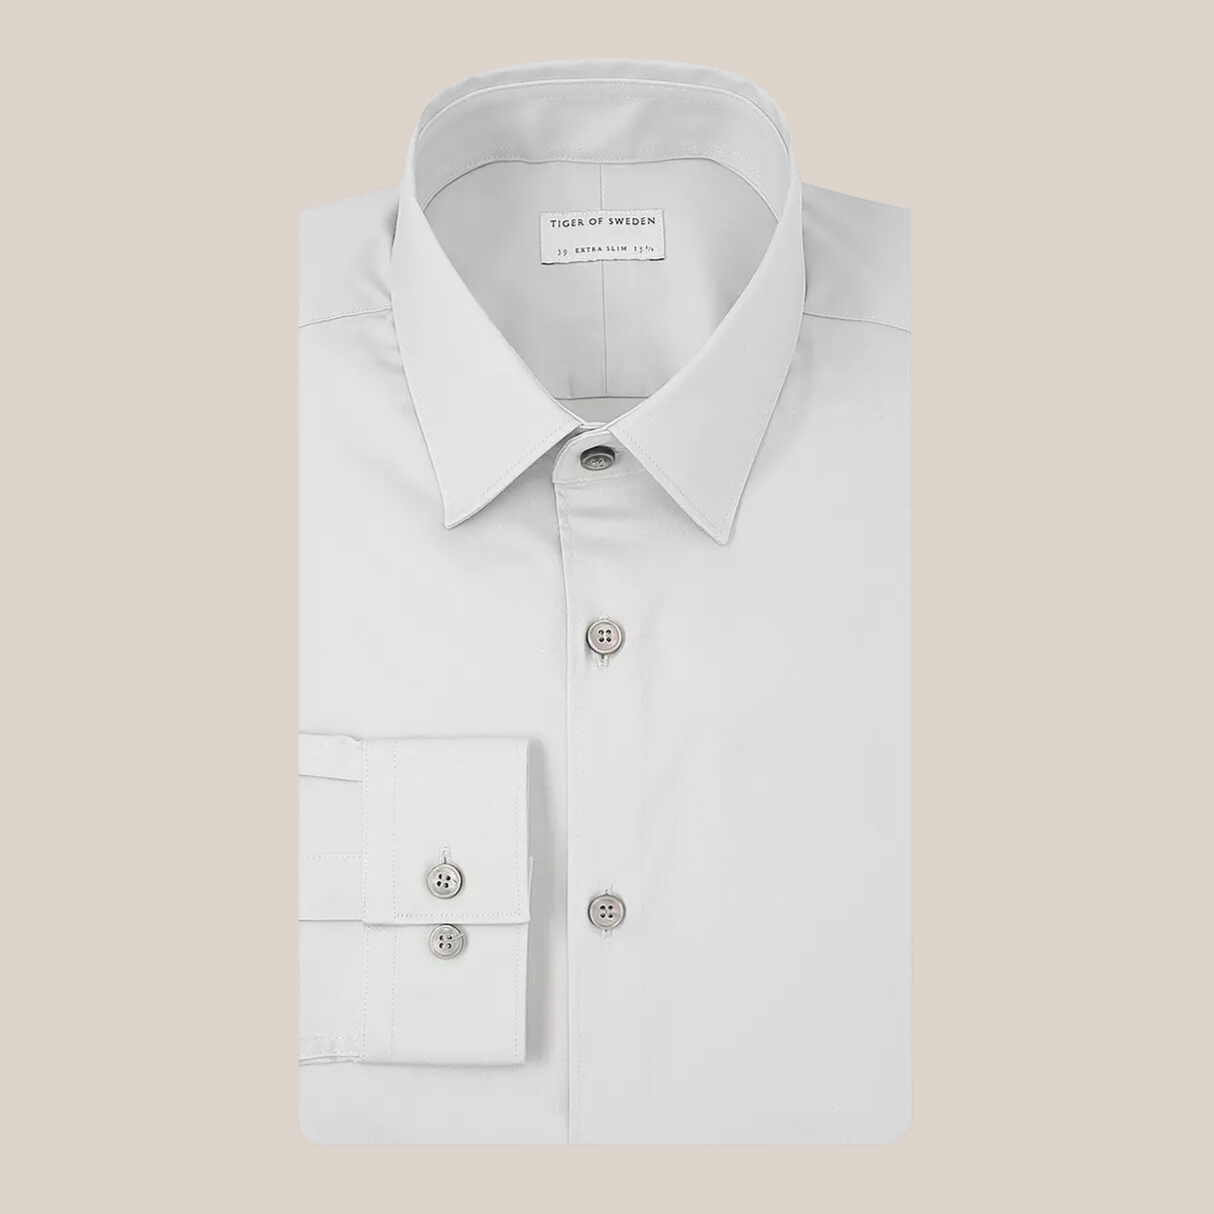 Gotstyle Fashion - Tiger Of Sweden Collar Shirts Cotton Stretch Shirt - Light Grey